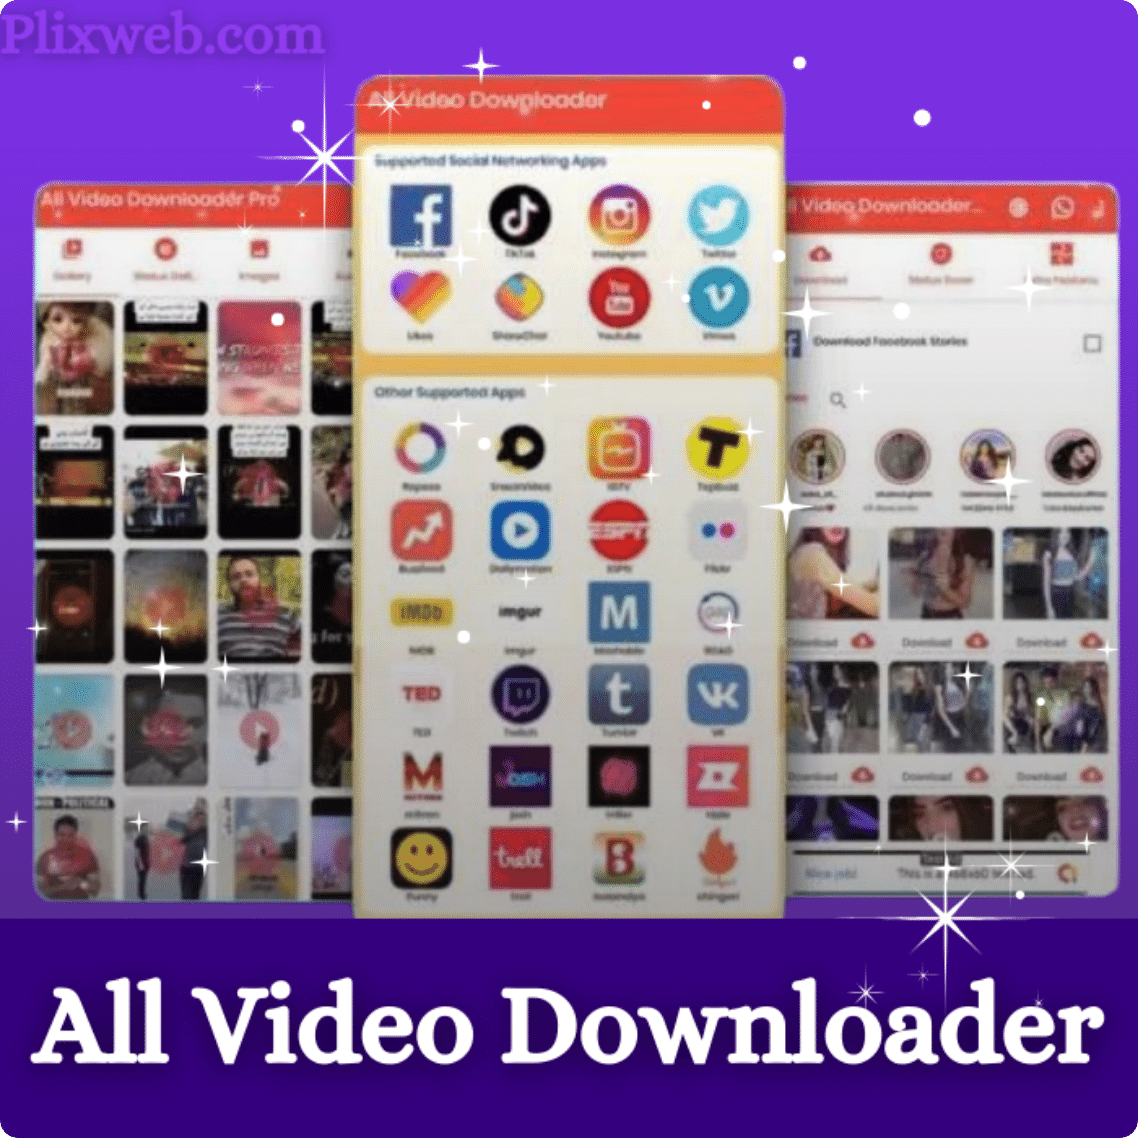 All Video Downloader App Development